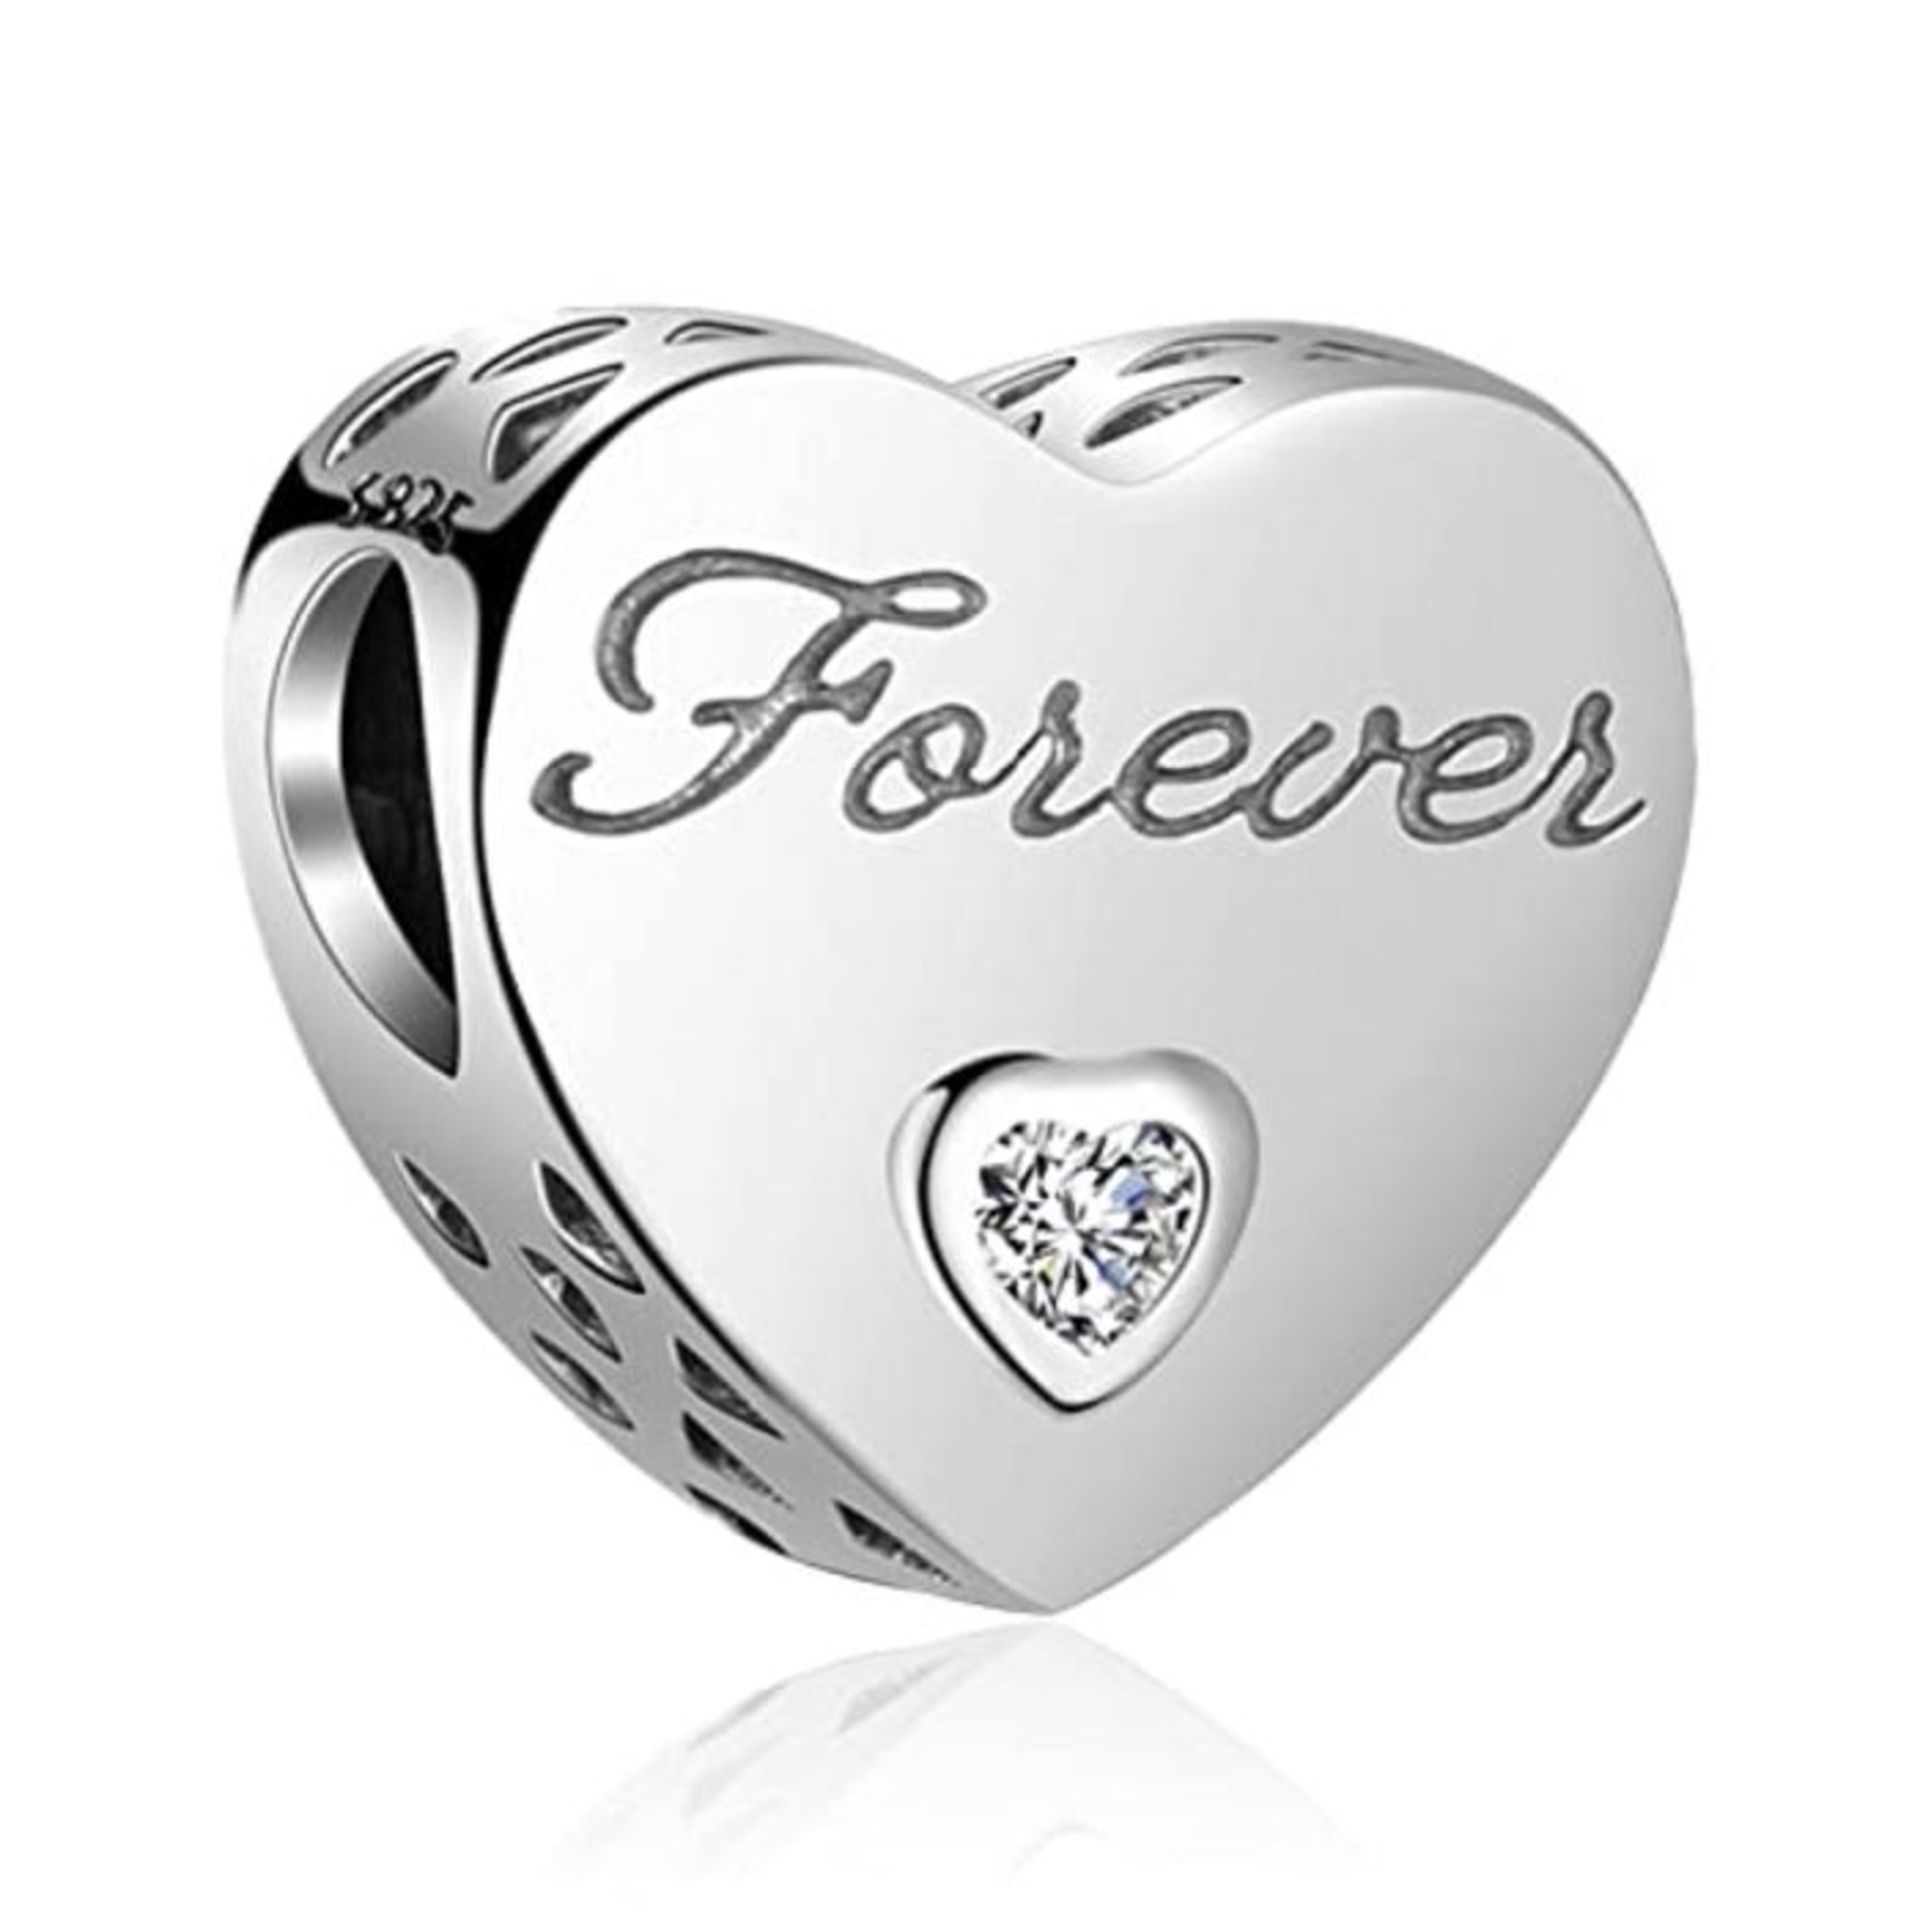 LaMenars Heart Charms "I Love You" Real 925 Sterling Silver Bead Charm Fits European B